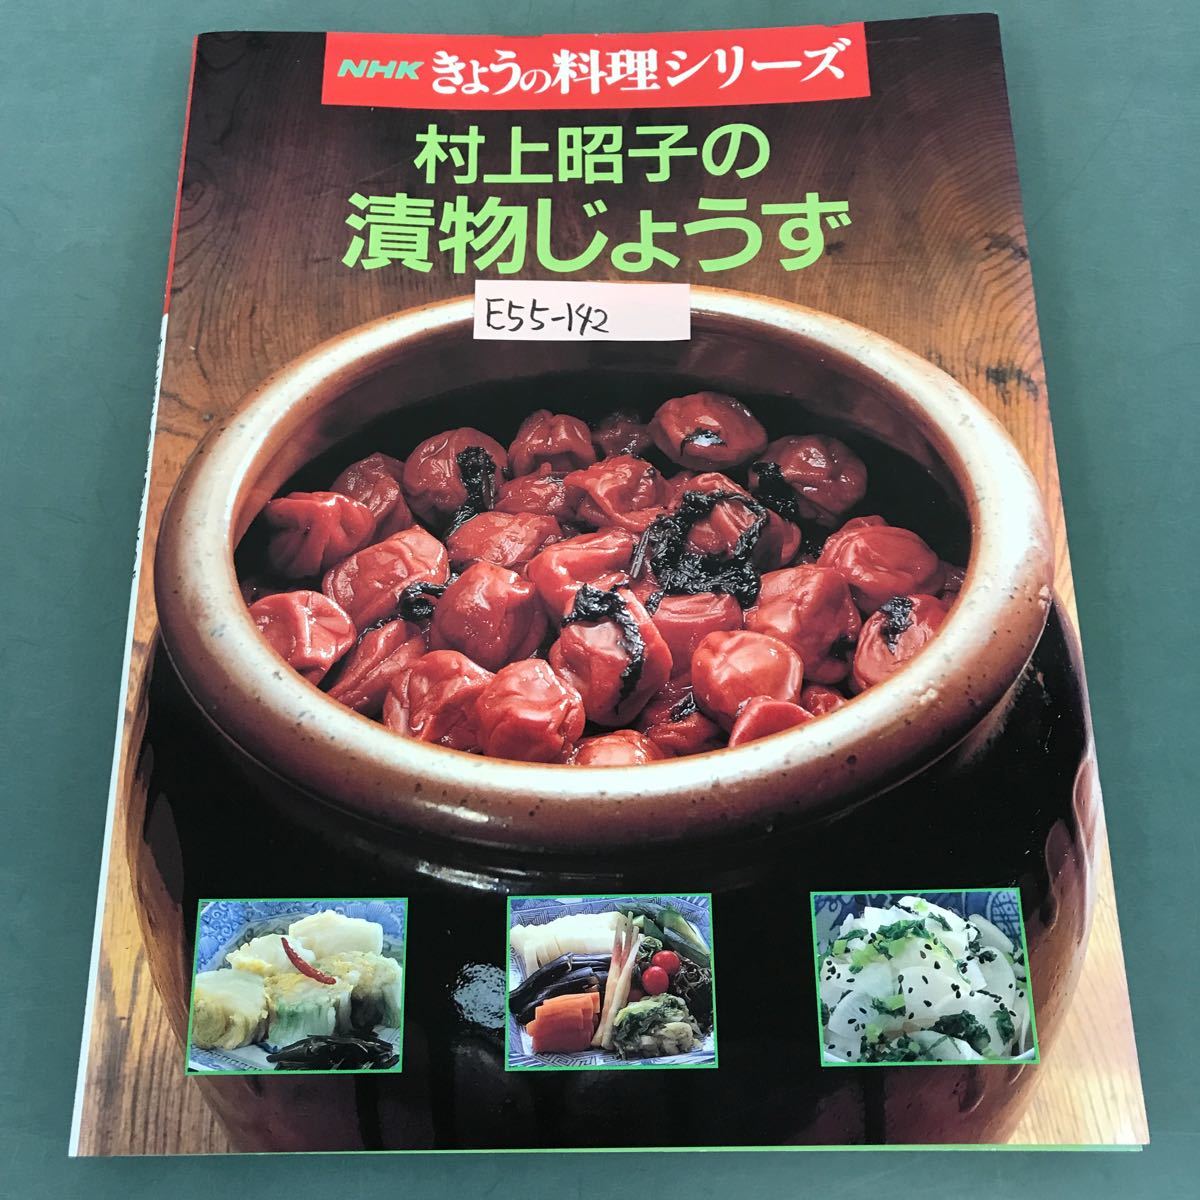 E55-142 NHKきょうの料理シリーズ 村上昭子の漬物じょうず 日本放送出版協会_画像1